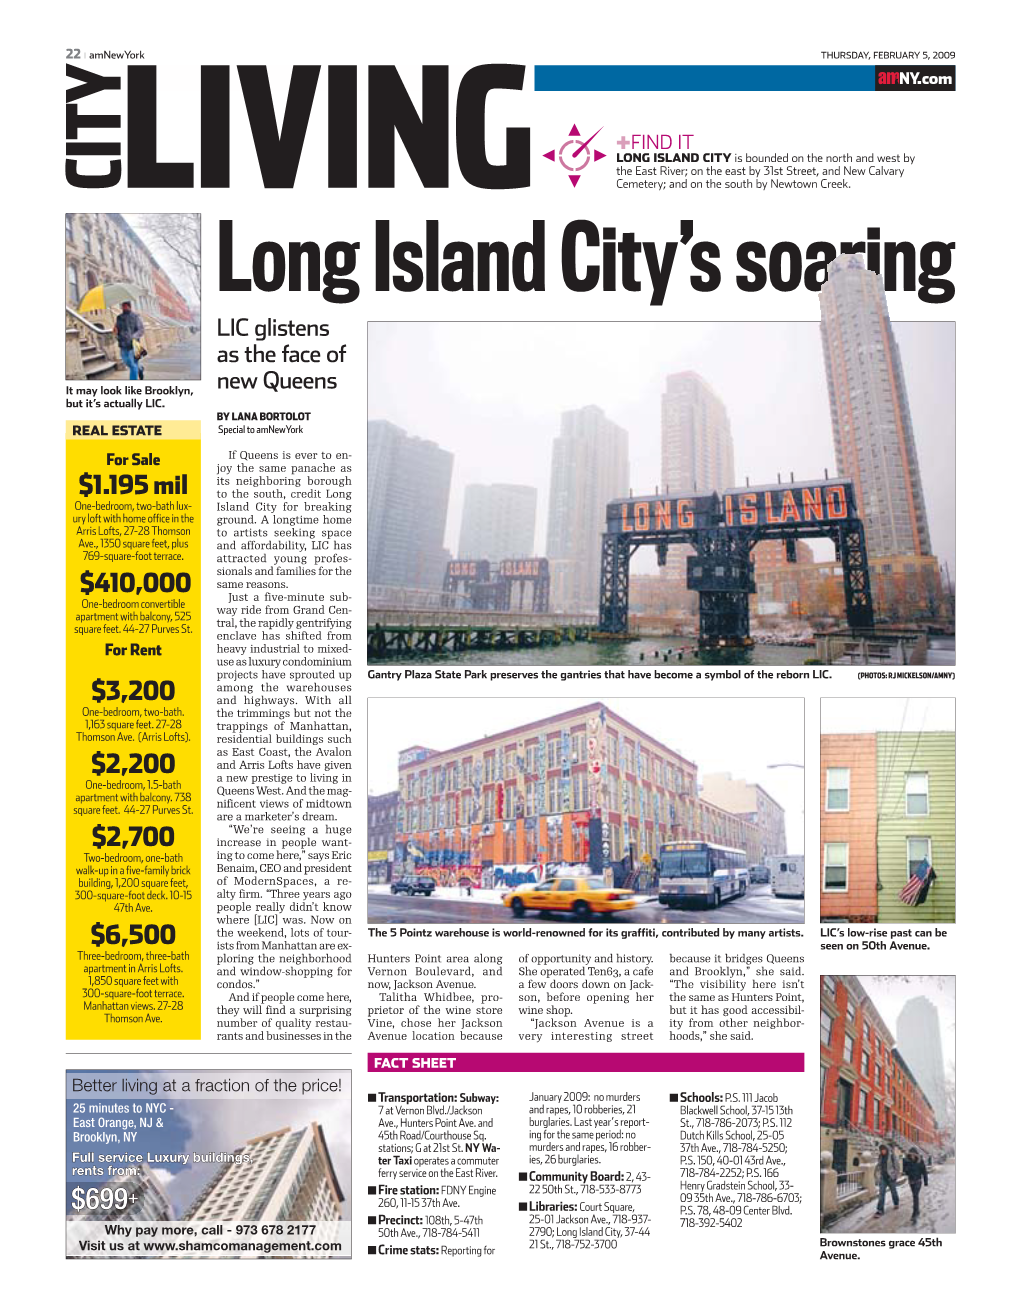 Long Island City's Soaring